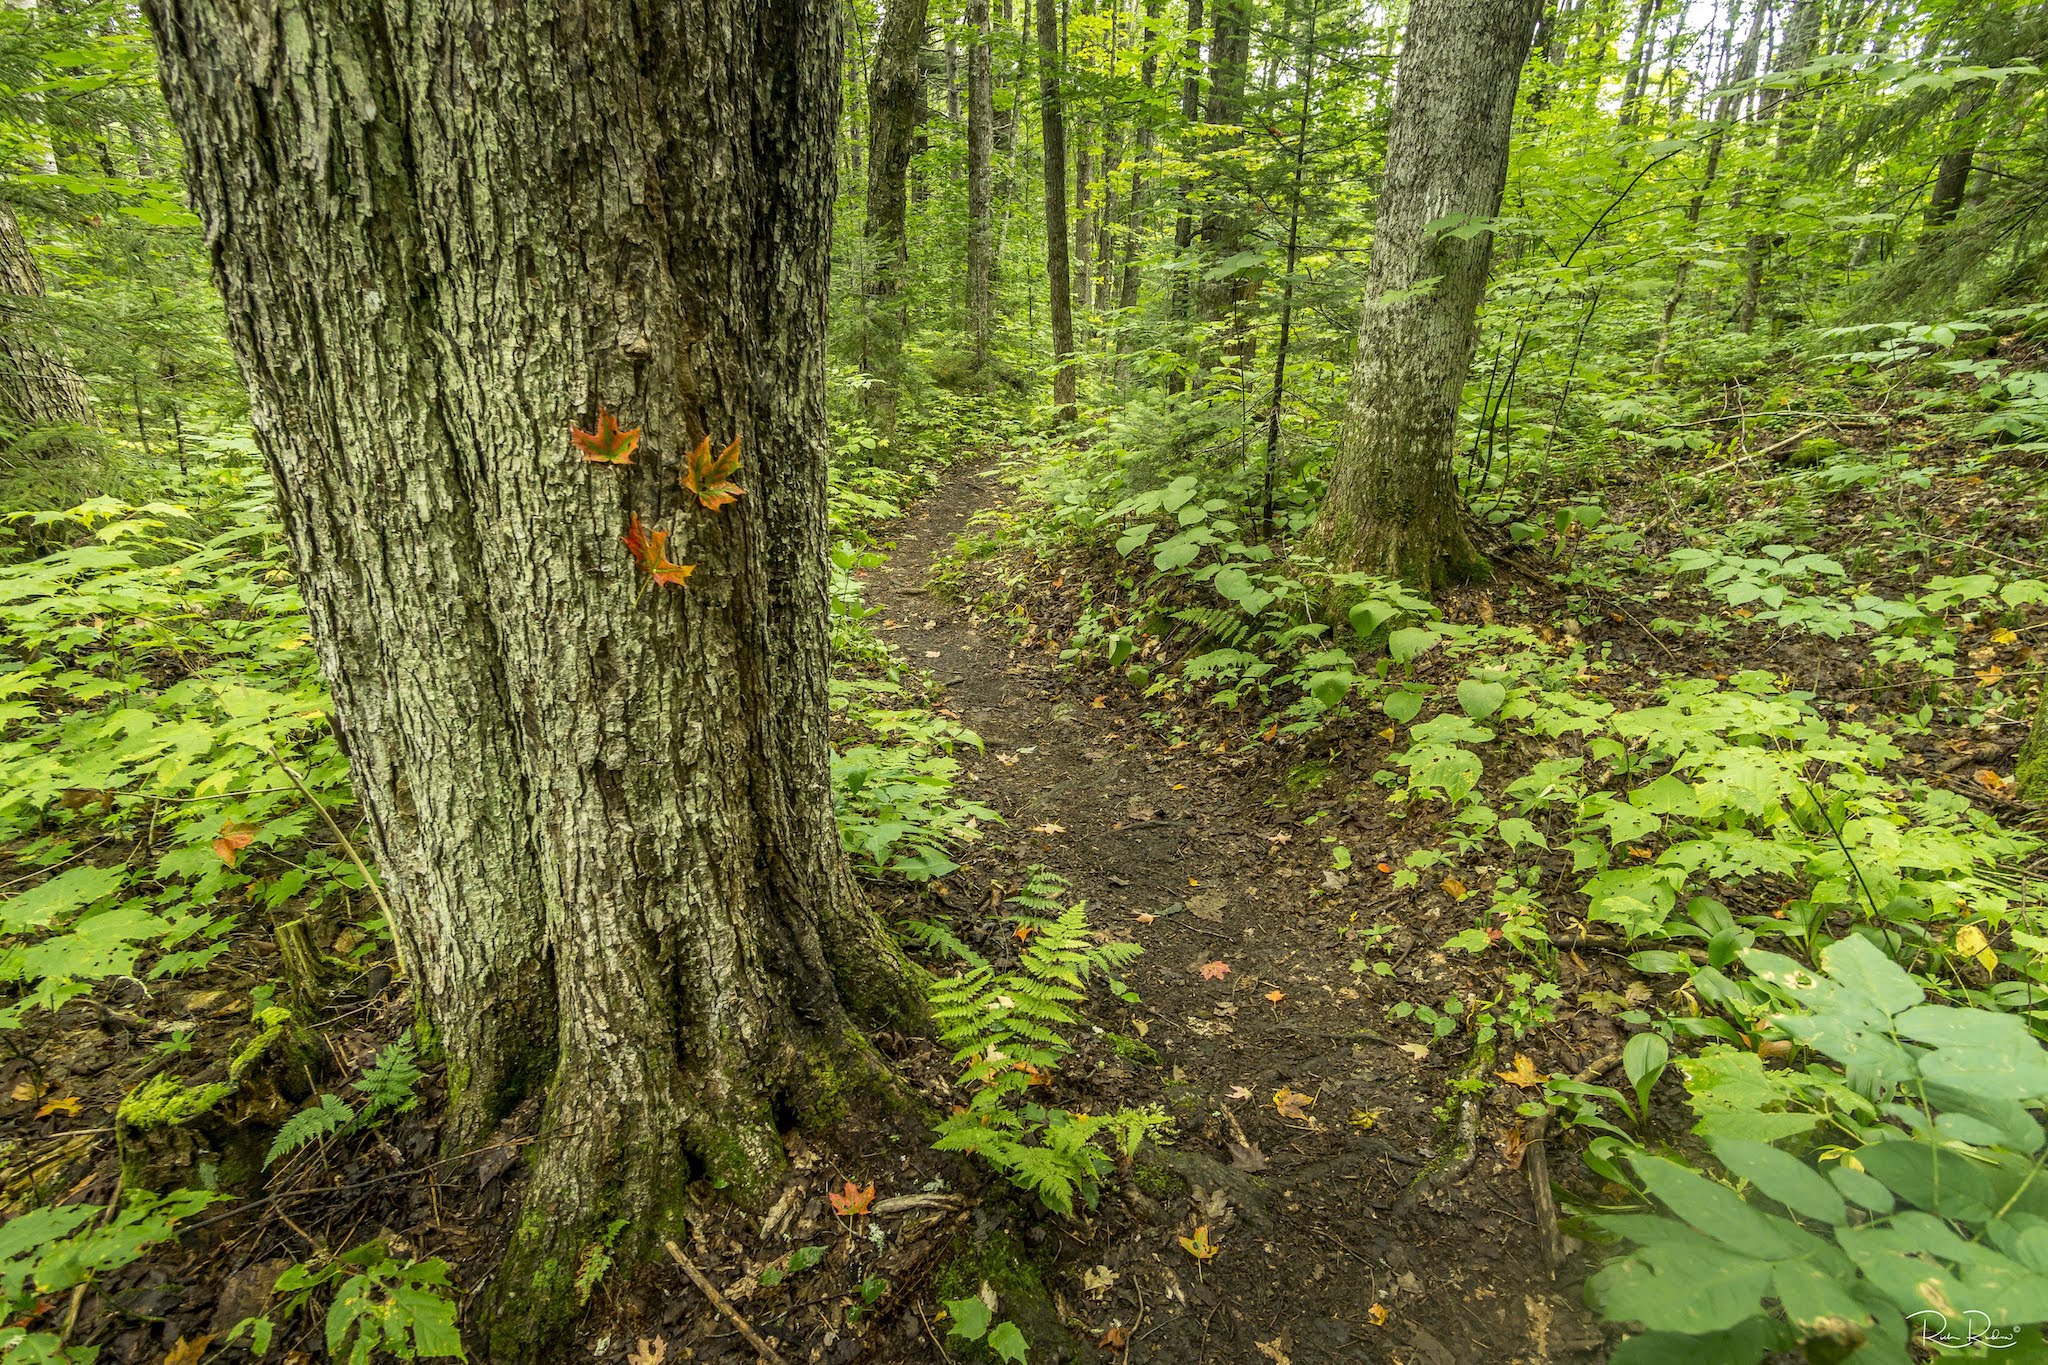 Appalachian trail running through thick green forest